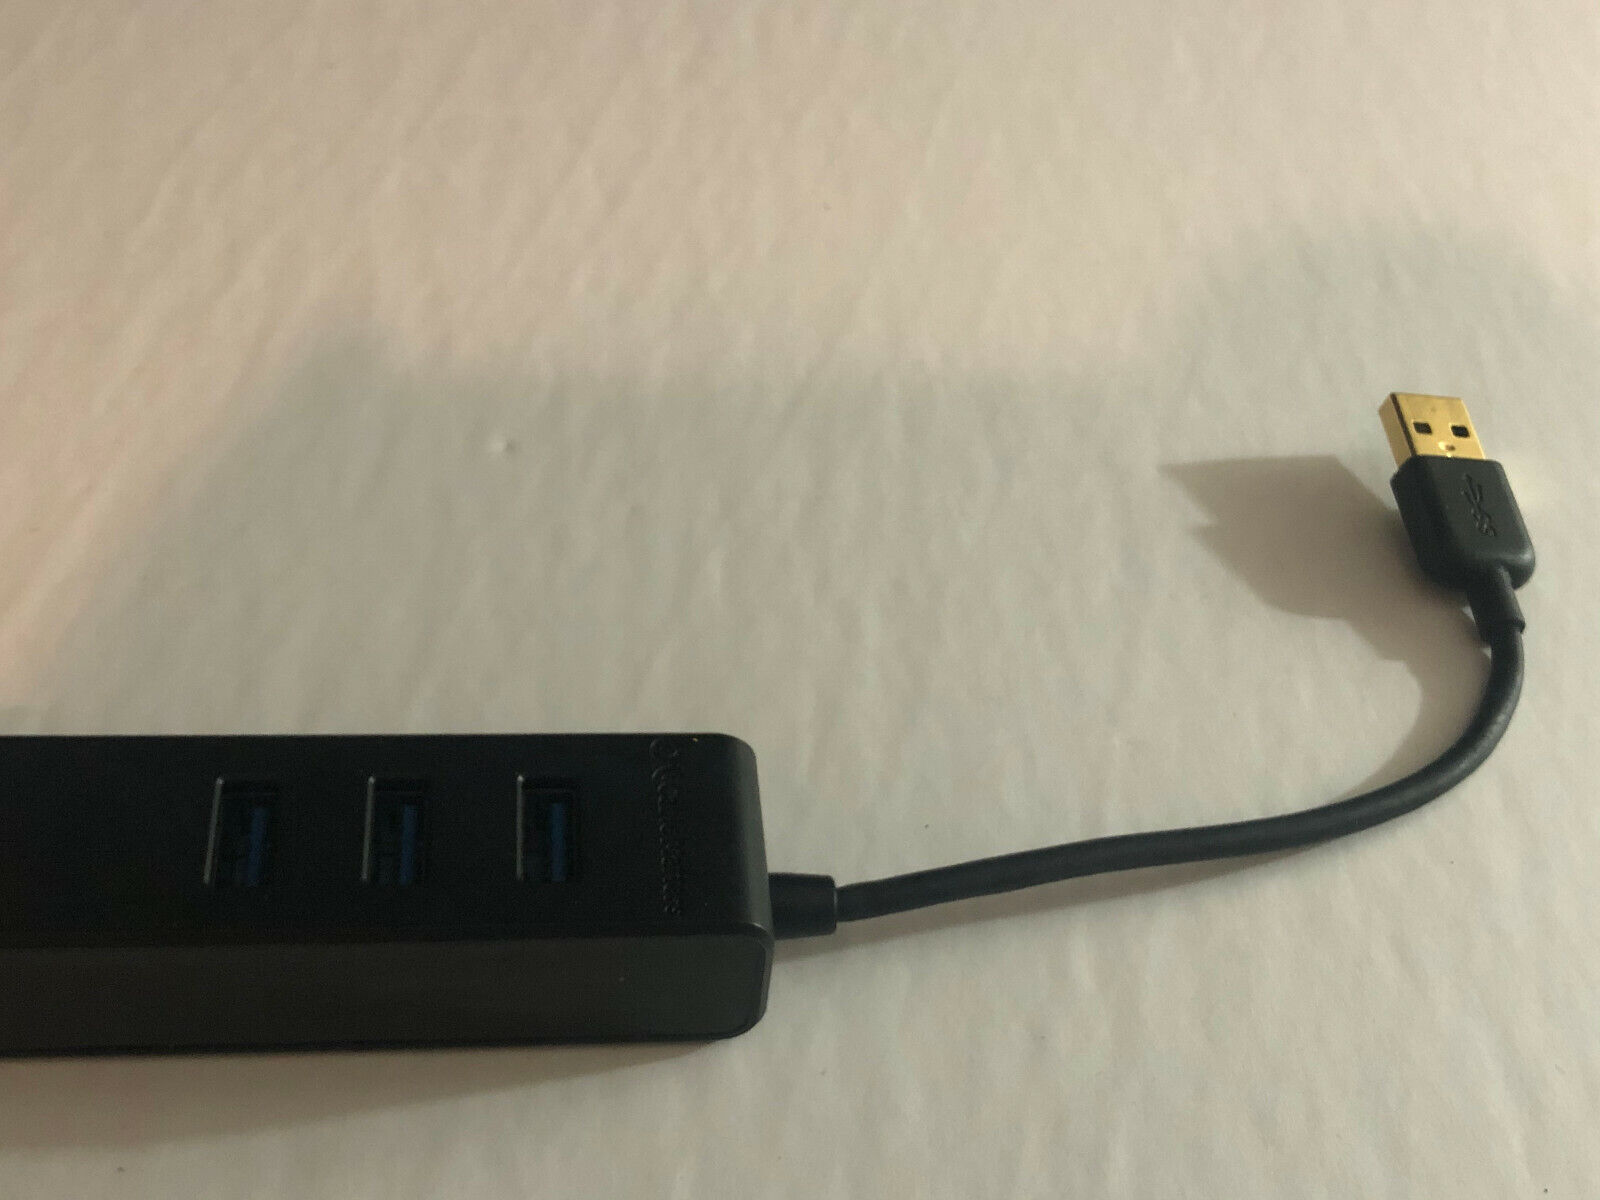 Cable Matters 3-Port SuperSpeed USB 3.0 Hub with Gigabit Ethernet Port in Black